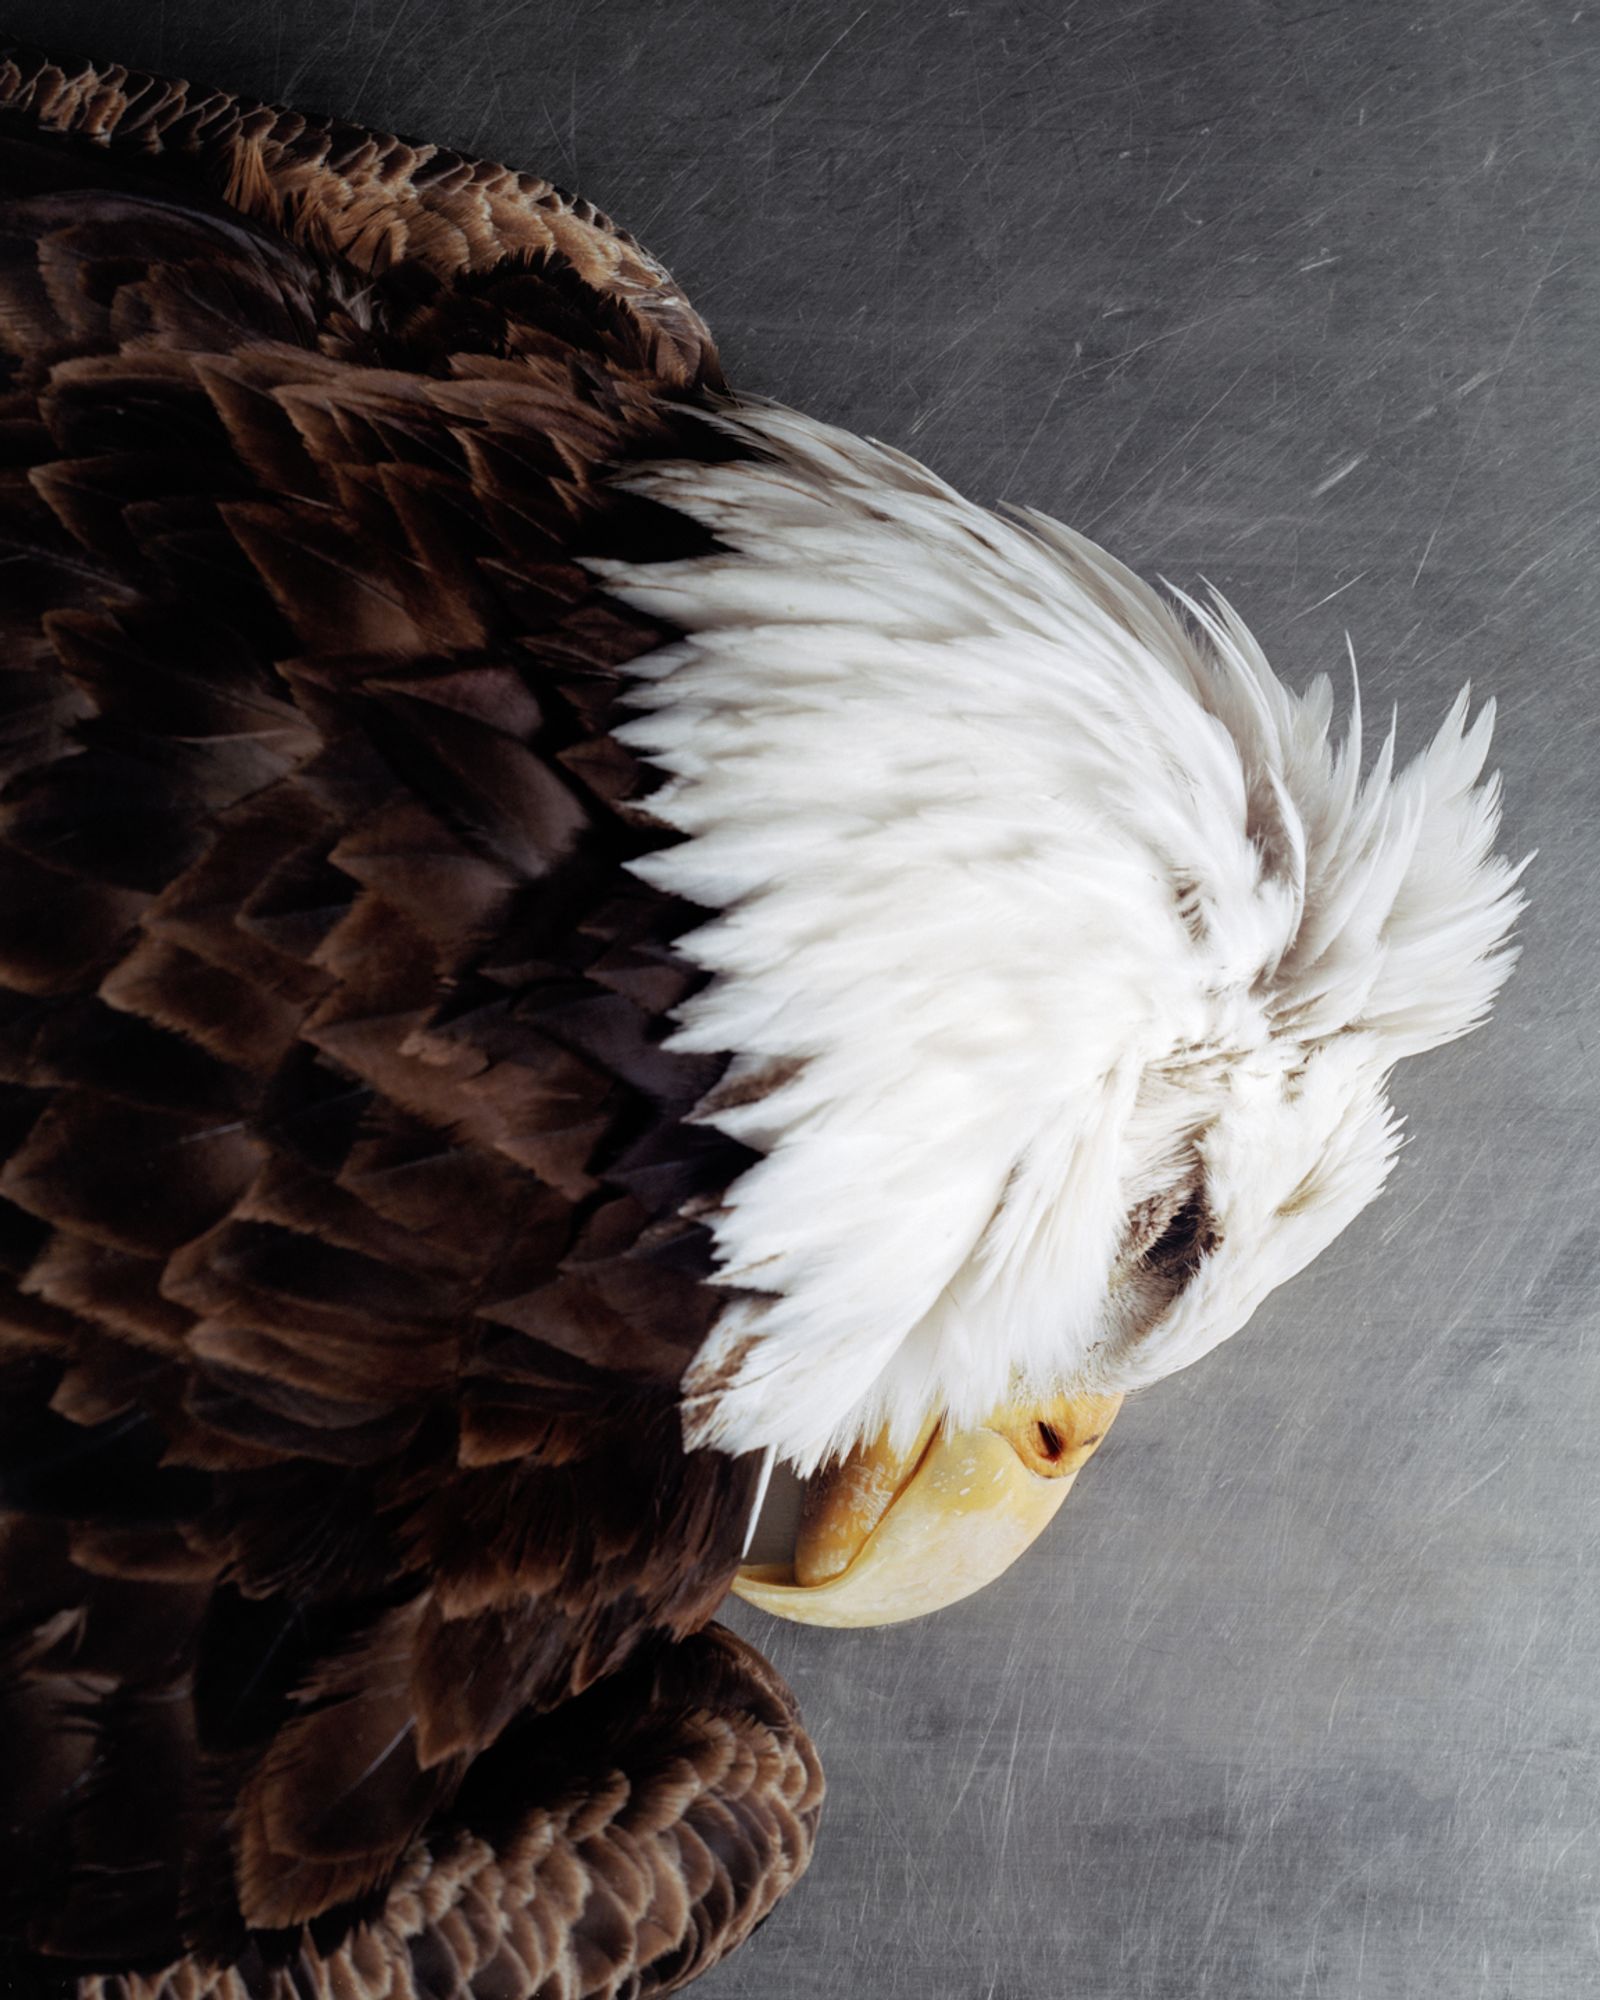 © Benjamin Rasmussen - Bald eagle before necropsy. National Eagle Repository, Commerce City, Colorado